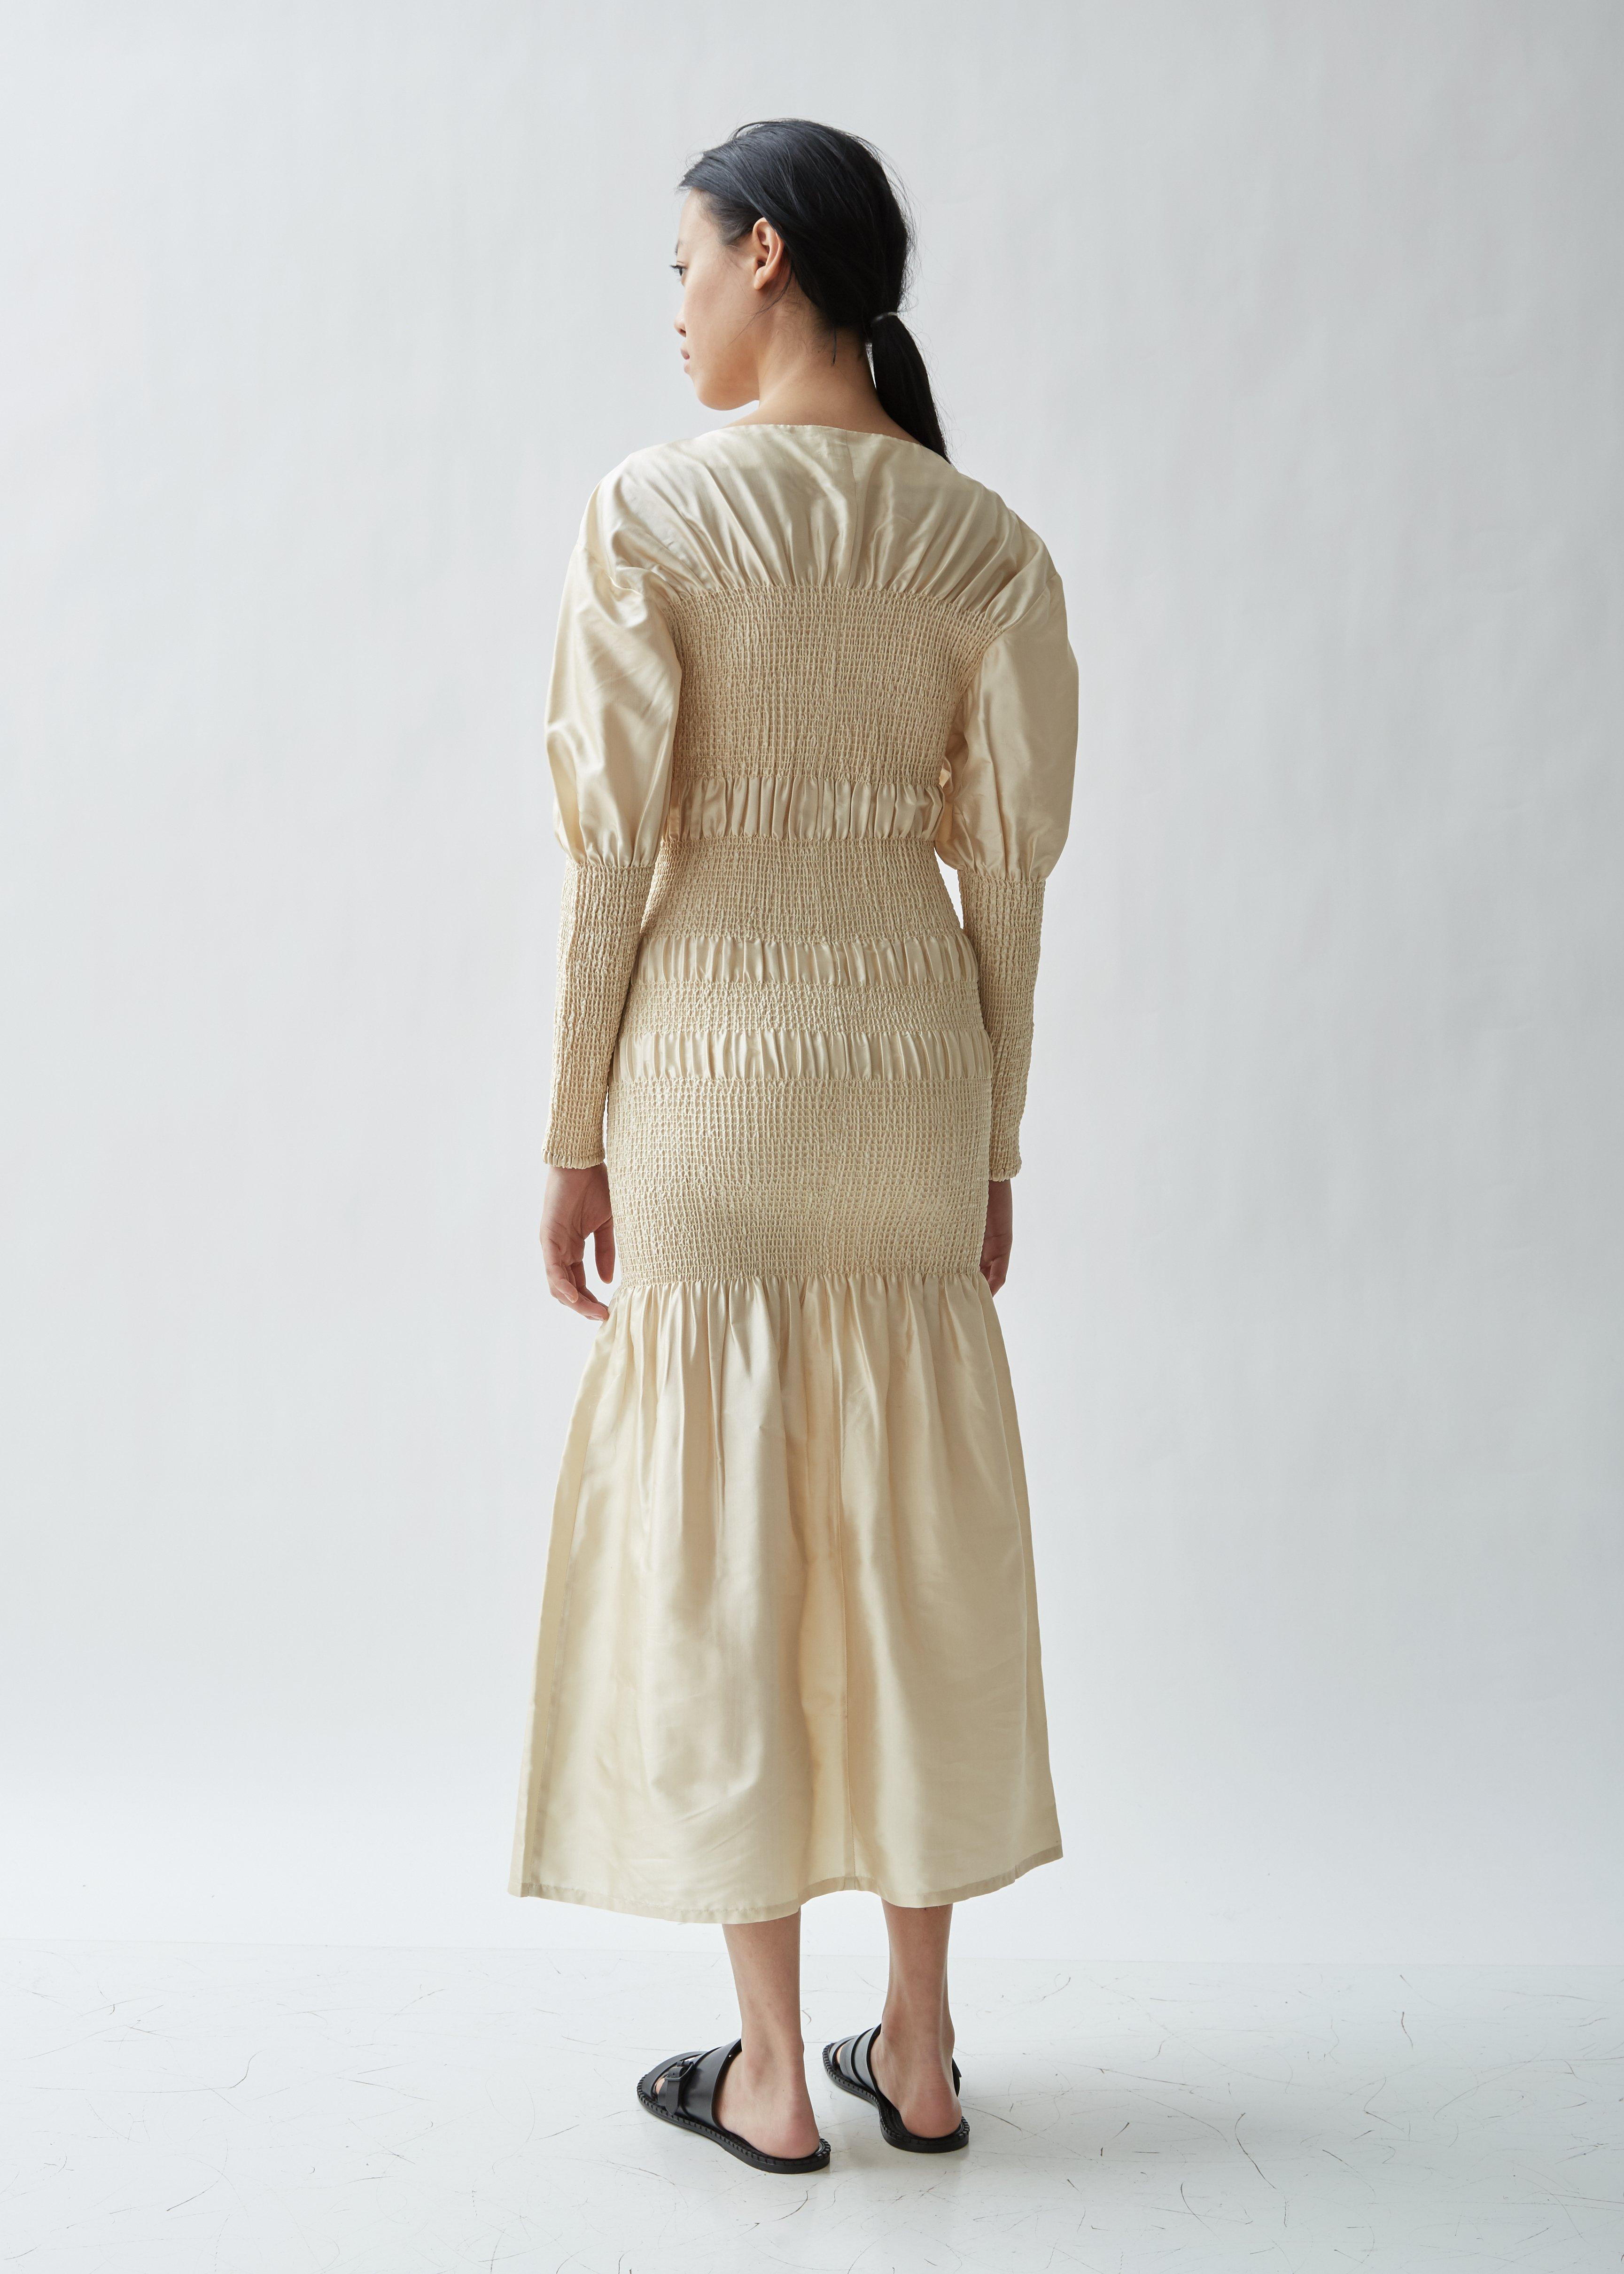 Totême Coripe Smocked Silk Dress in Natural | Lyst